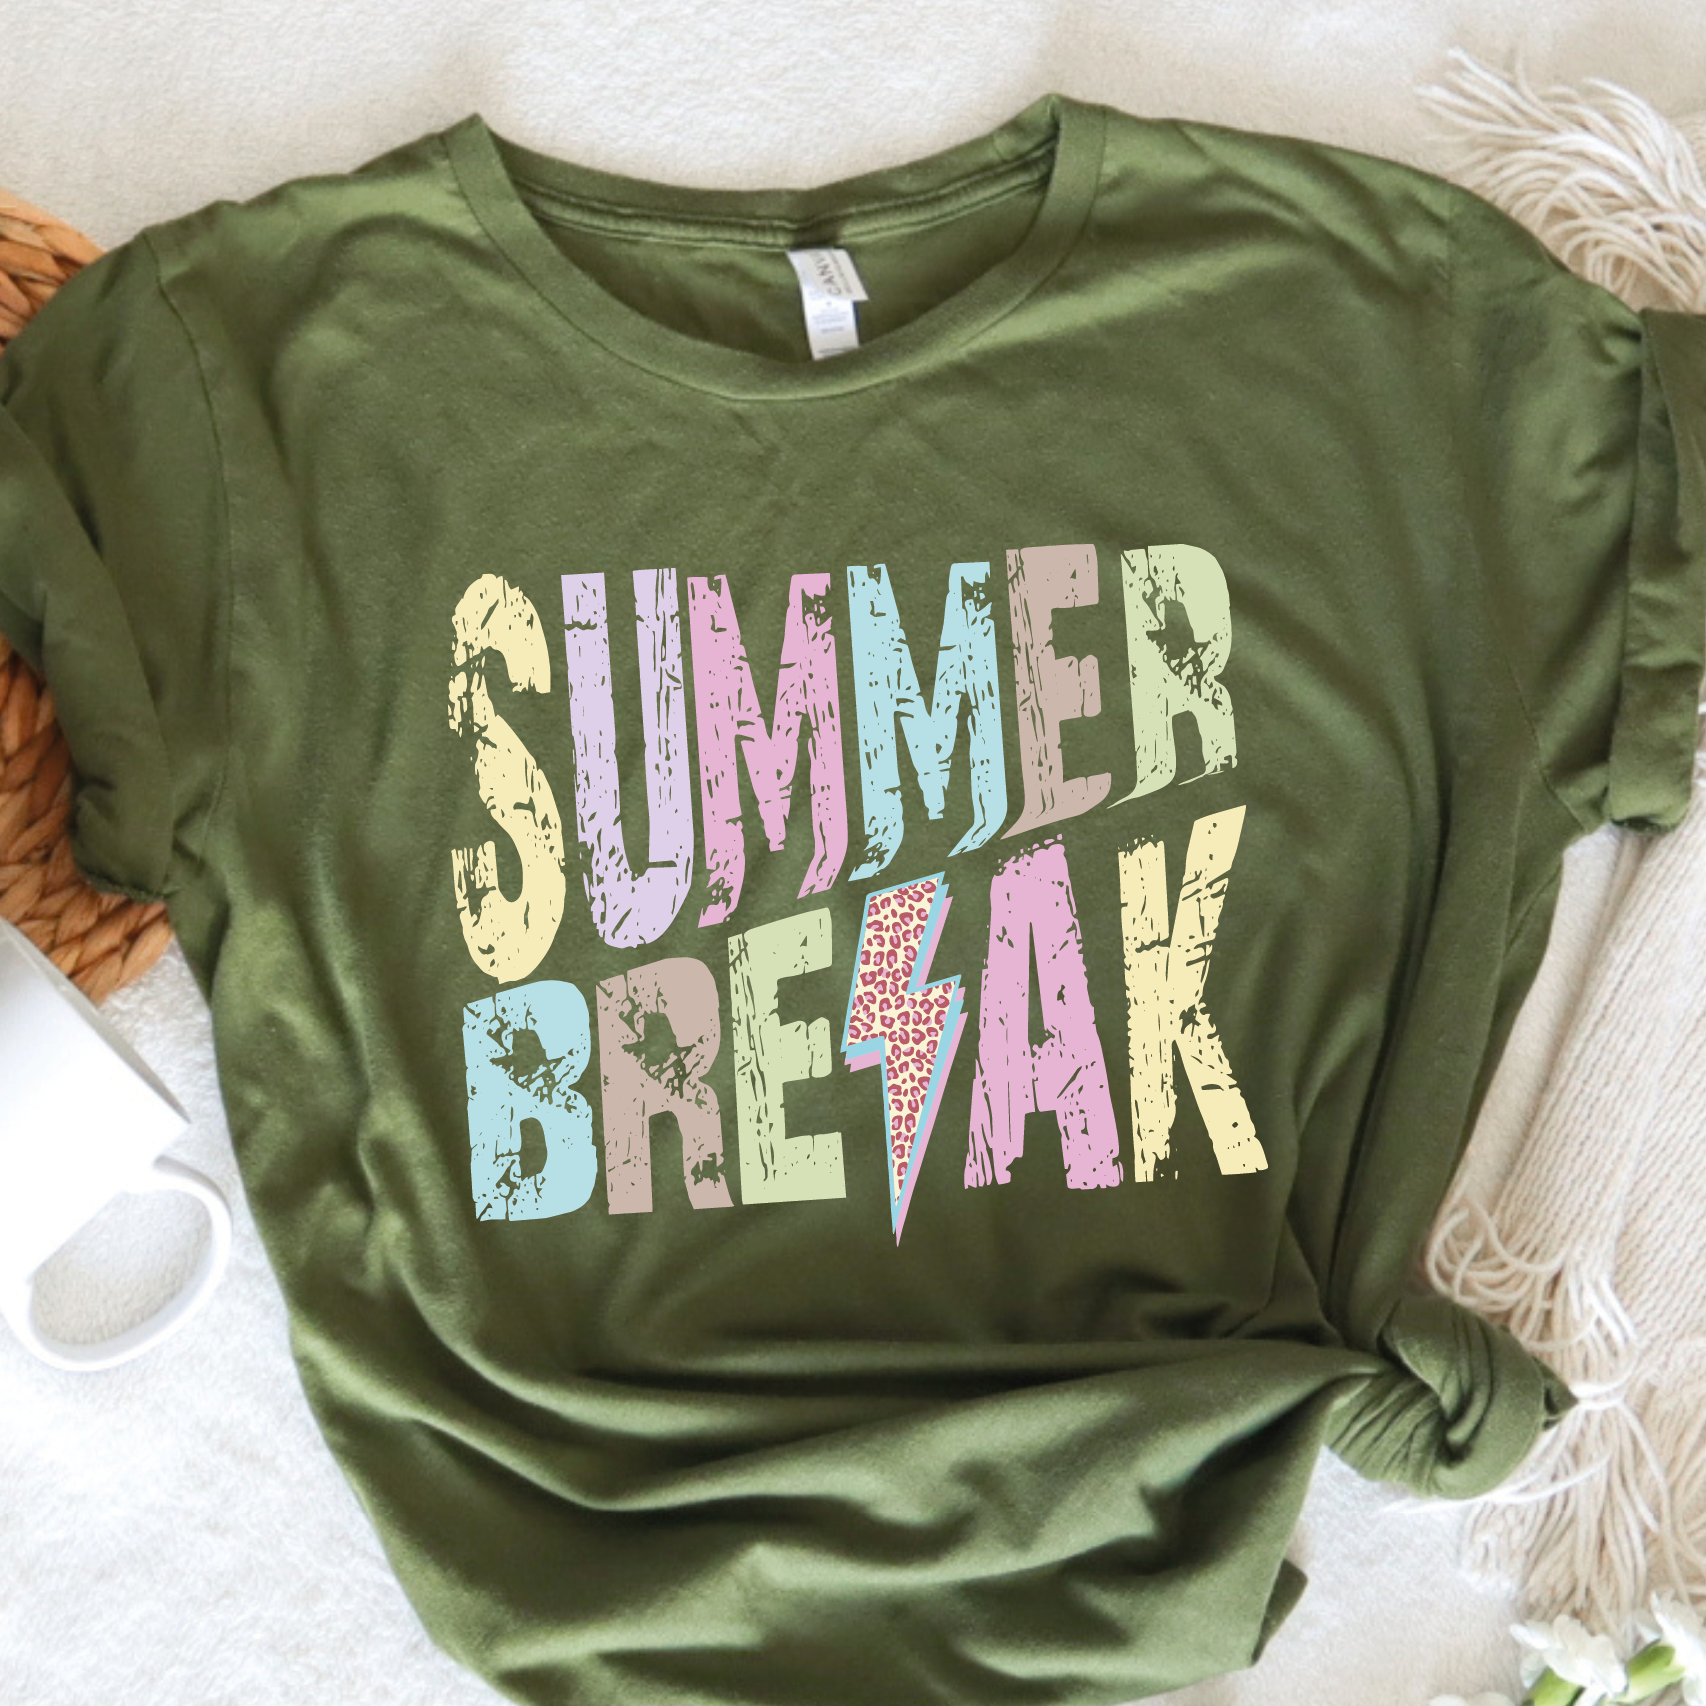 a green shirt that says summer break on it